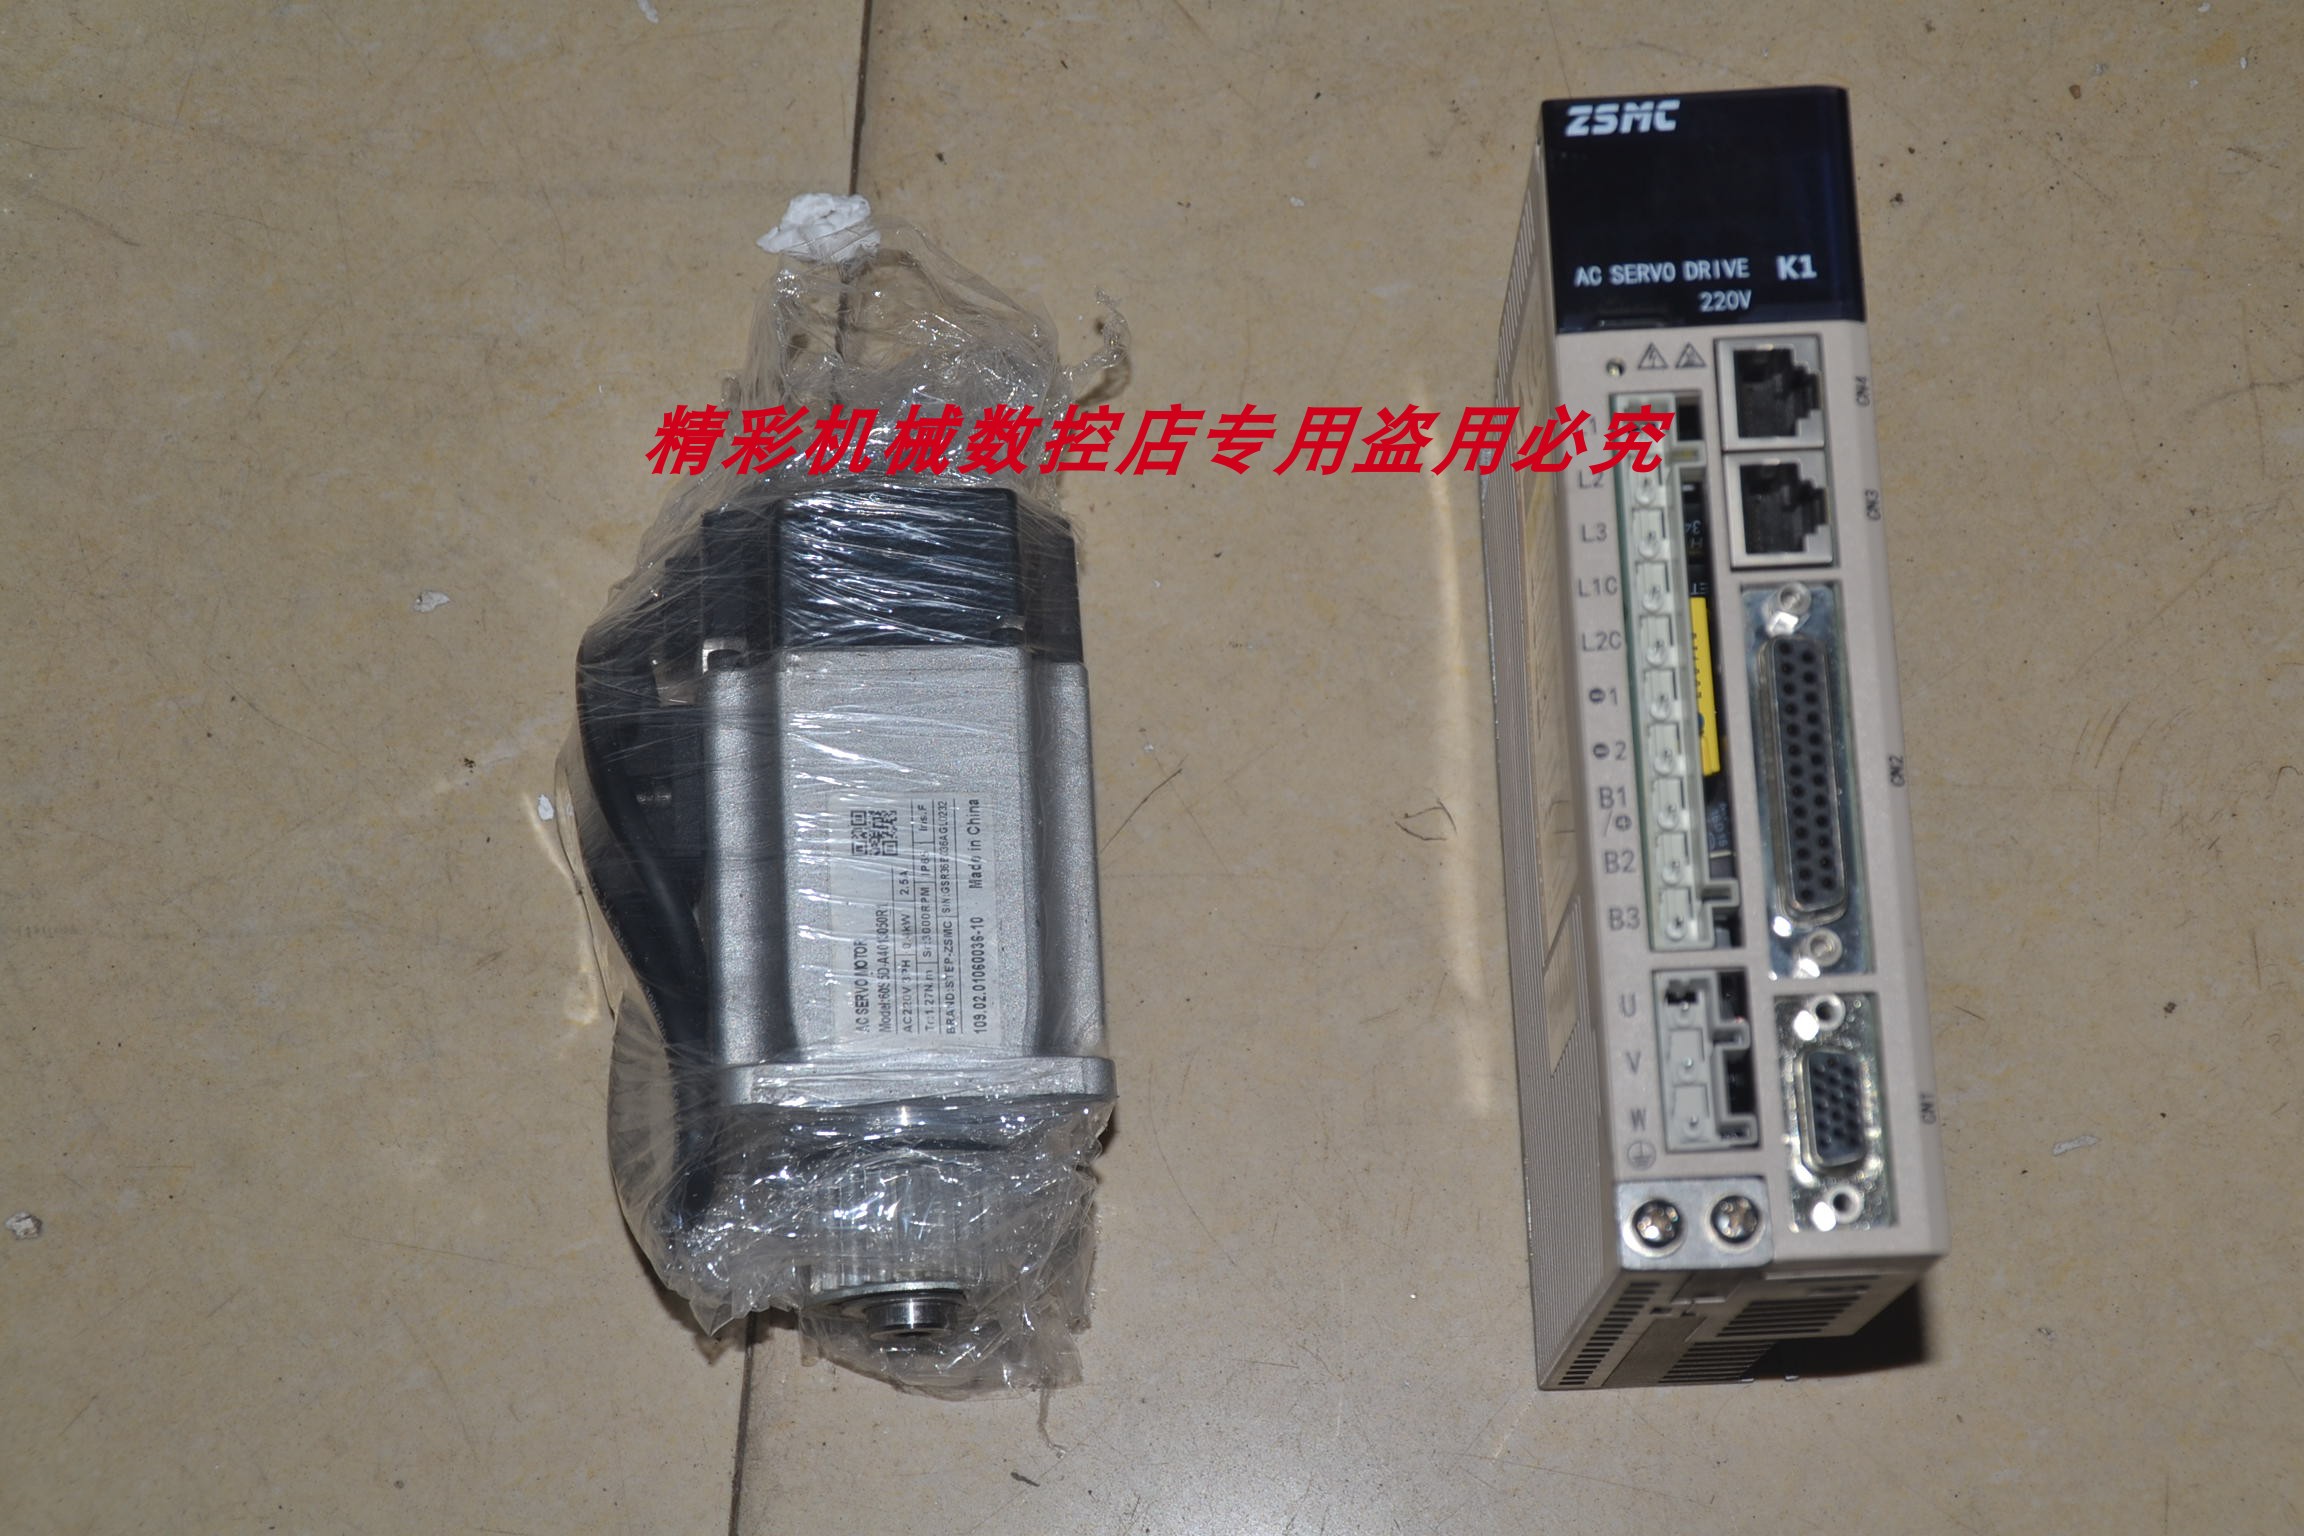 # ZSMC ZSD-K1AS04AB 60S5D-A4013050R1 400W伺服驱动器。。。。